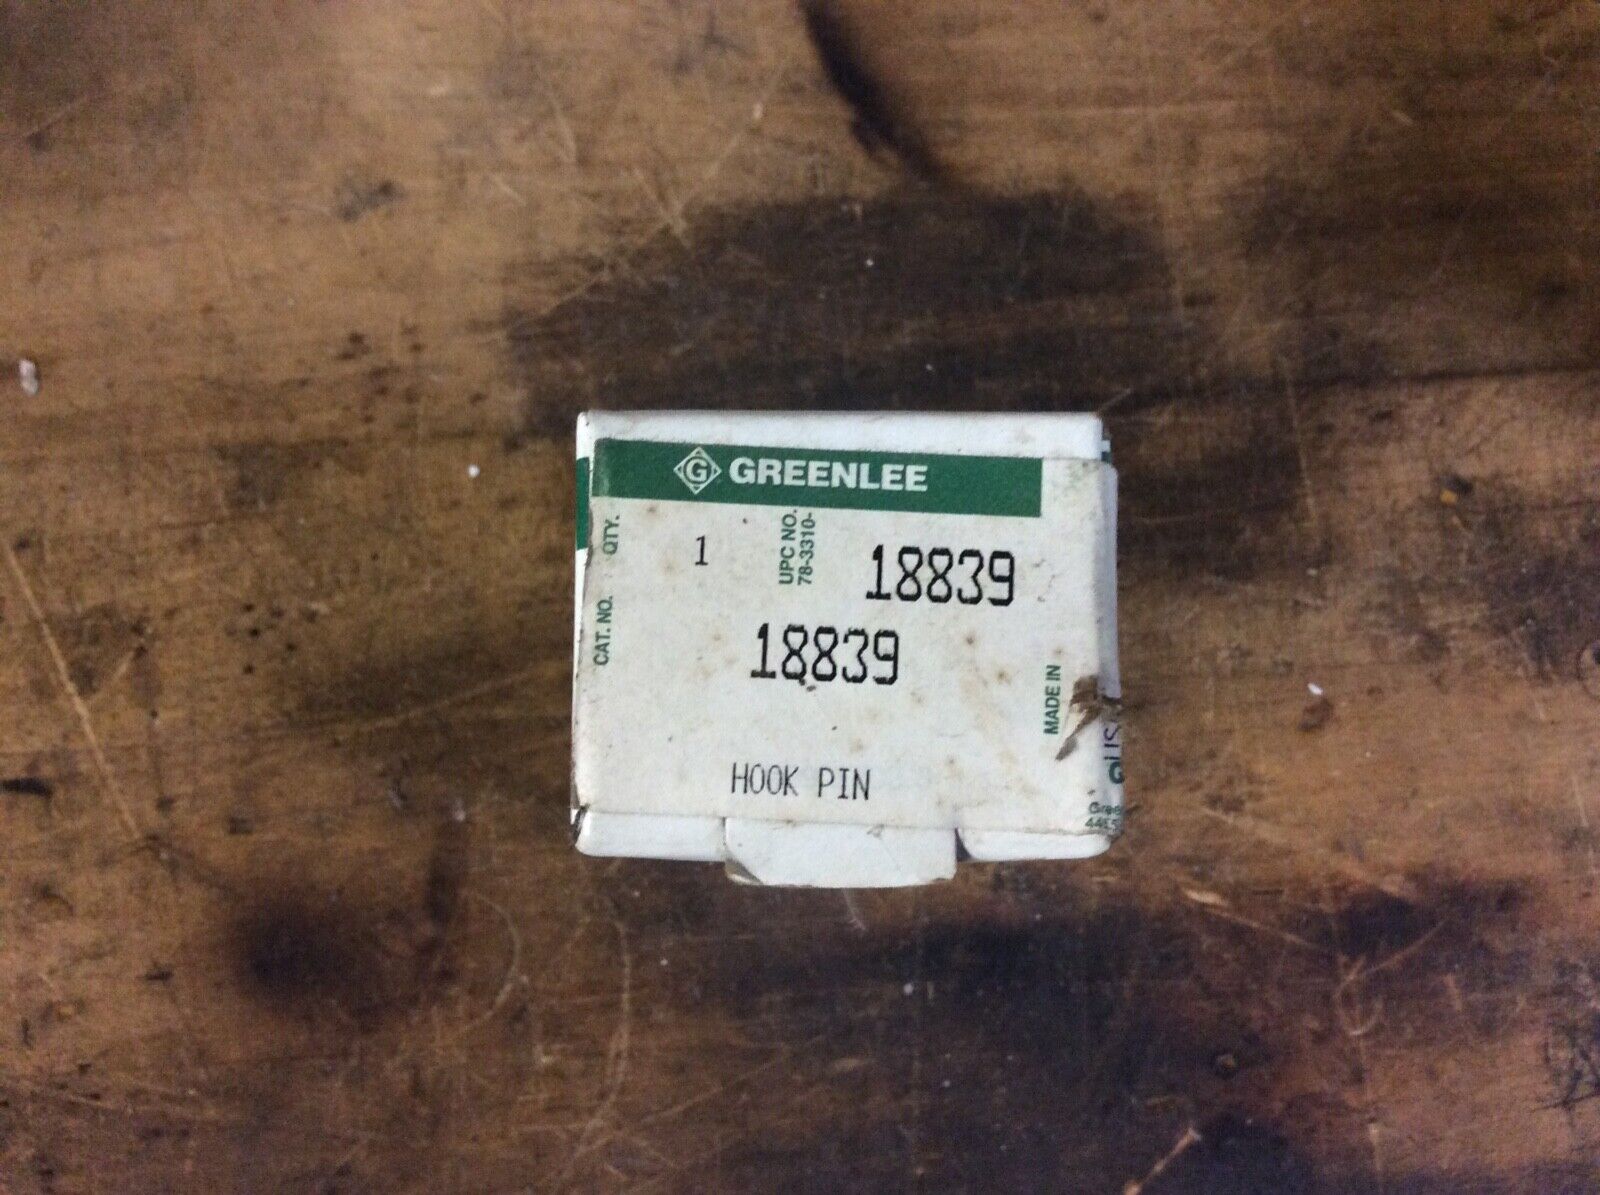 Greenlee No. 18839 Rigid Hook Pin, New w/ Box, light surface rus